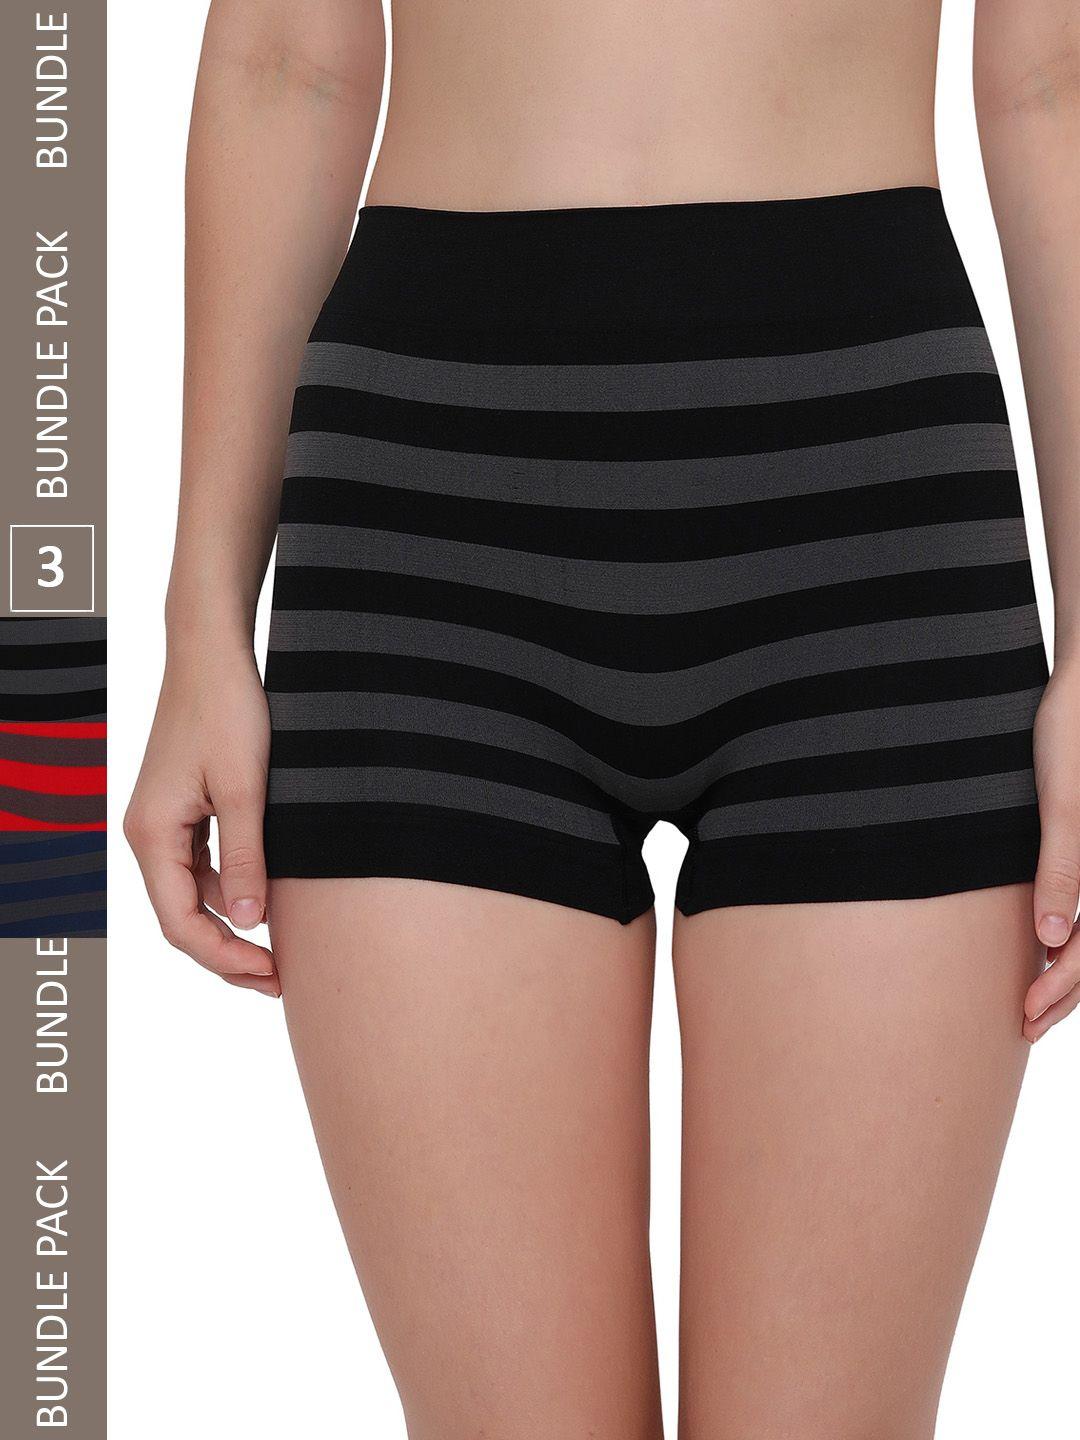 plumbury women pack of 3 striped anti-microbial seamless boy shorts briefs